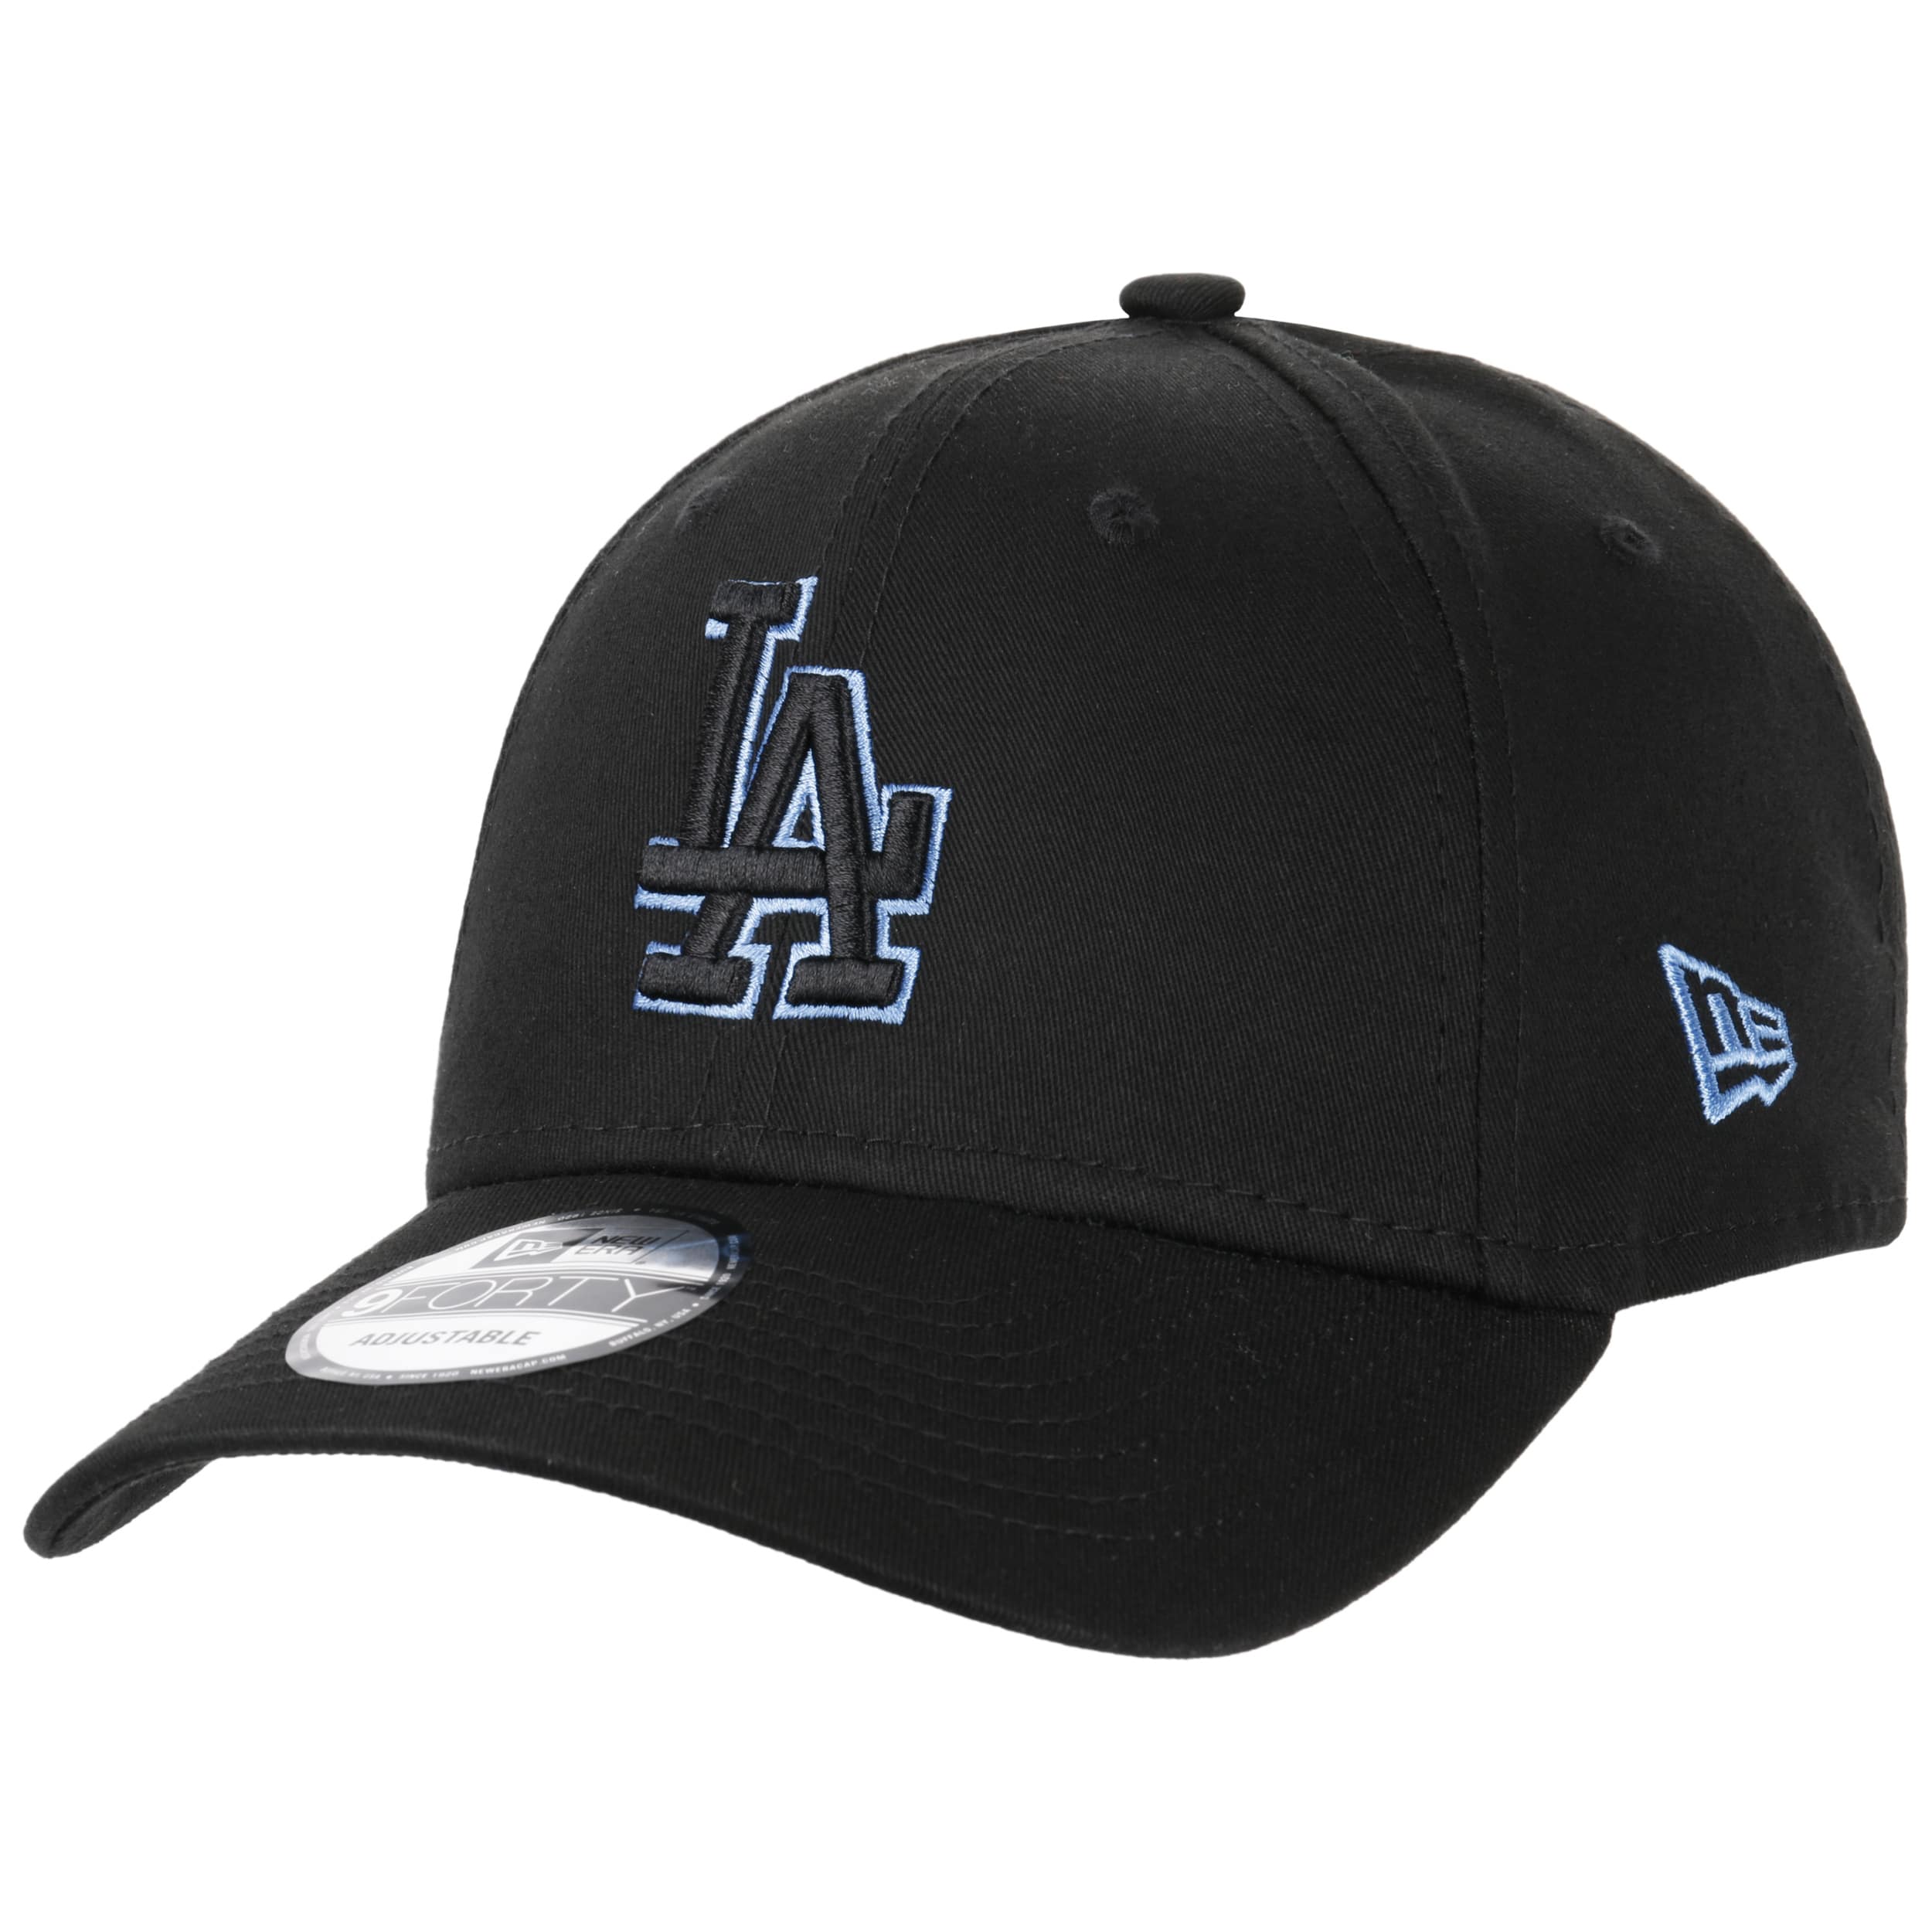 MLB, New Era introduce new line of caps